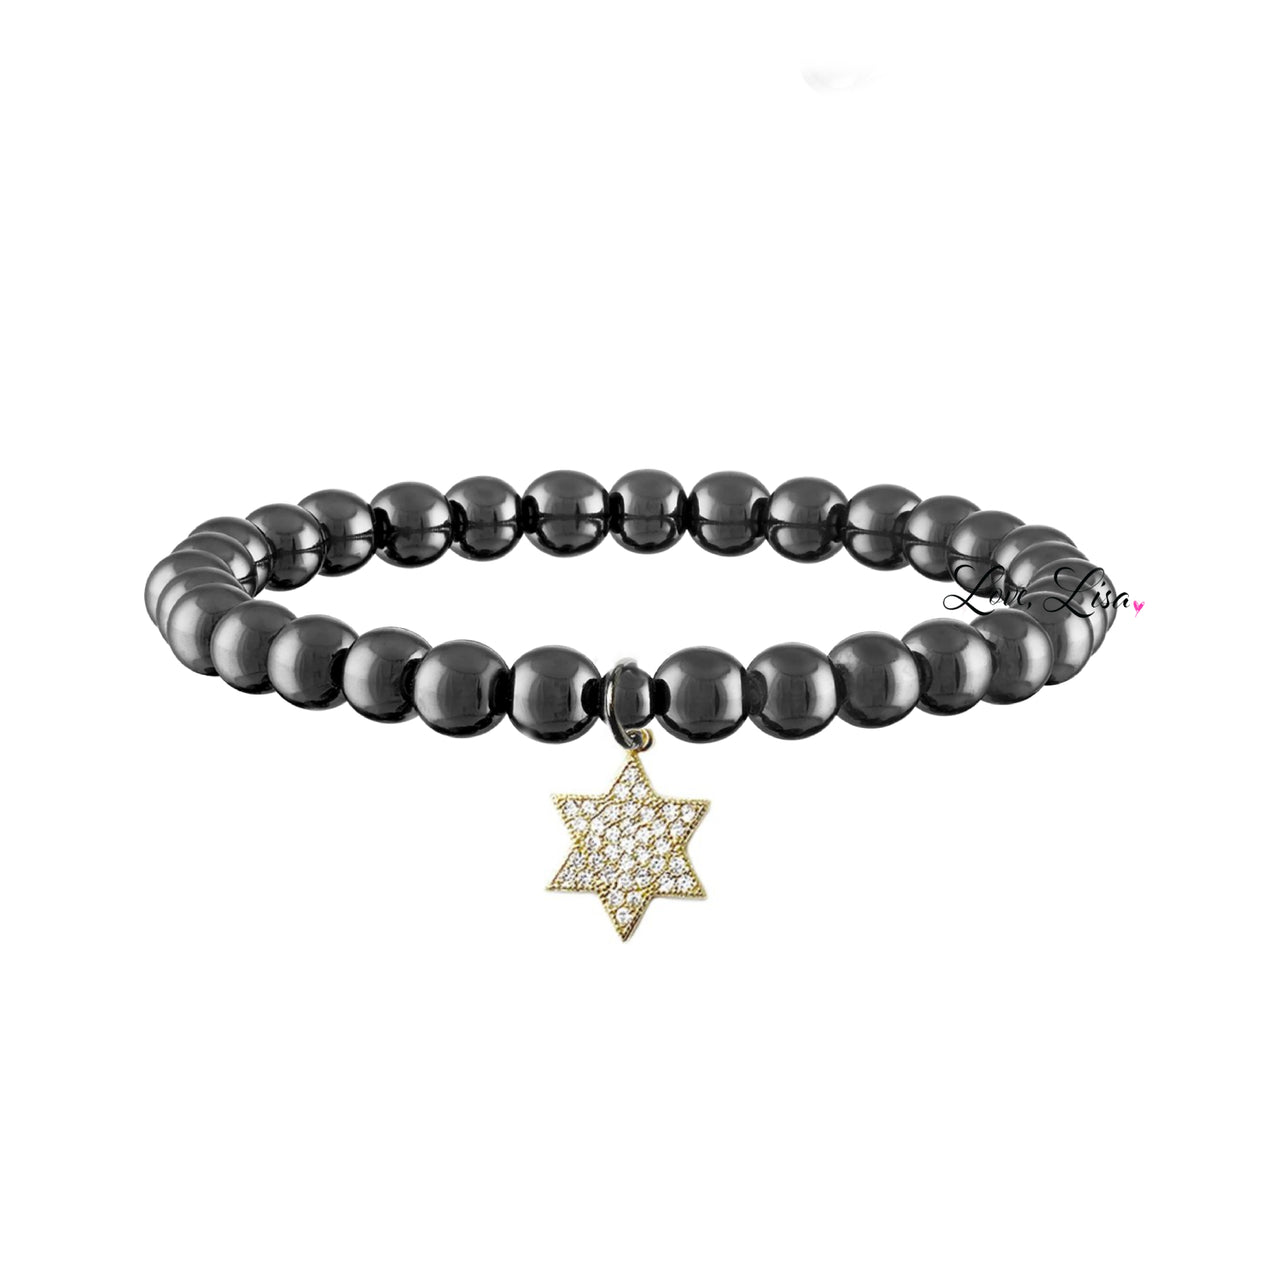 Hannah's Beautiful Jewish Star Bracelet